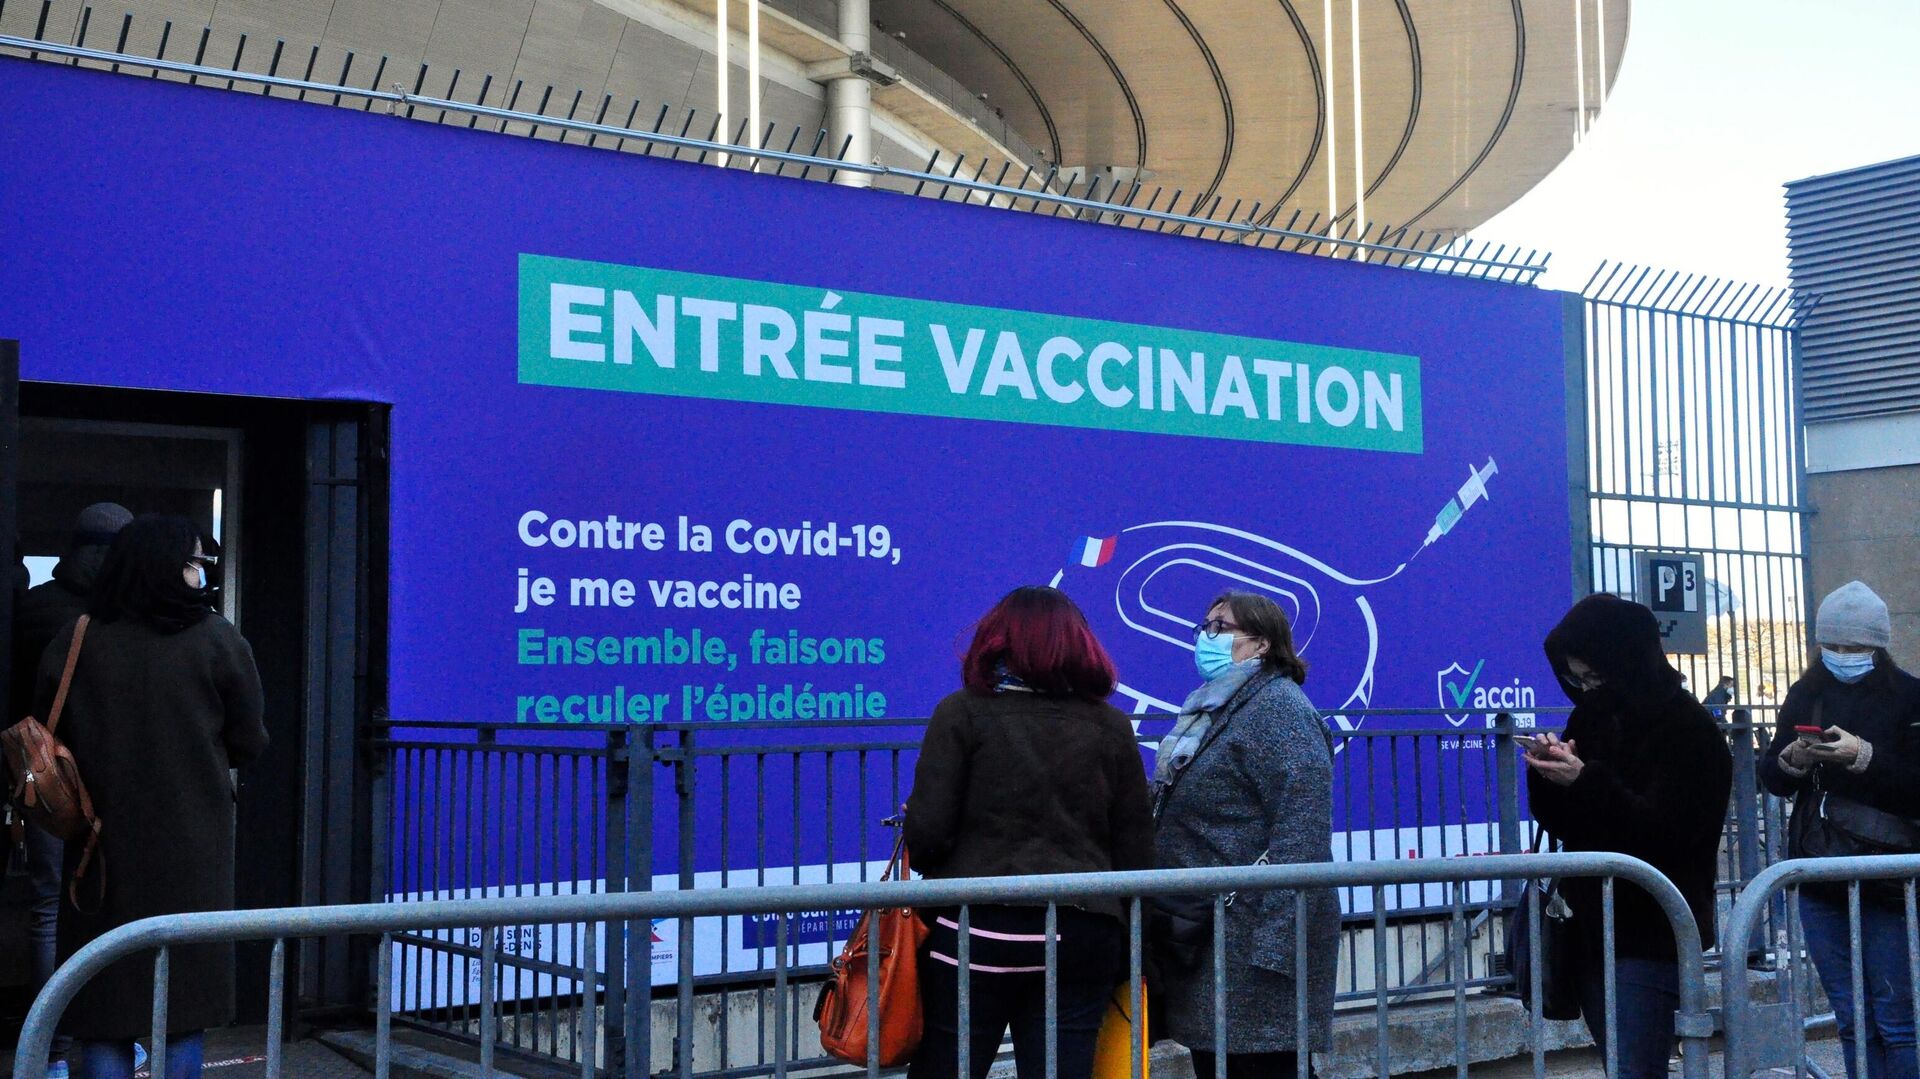 Местные жители стоят в очереди на вакцинацию от коронавируса в центре вакцинодроме на стадионе Стад де Франс - РИА Новости, 1920, 30.11.2021